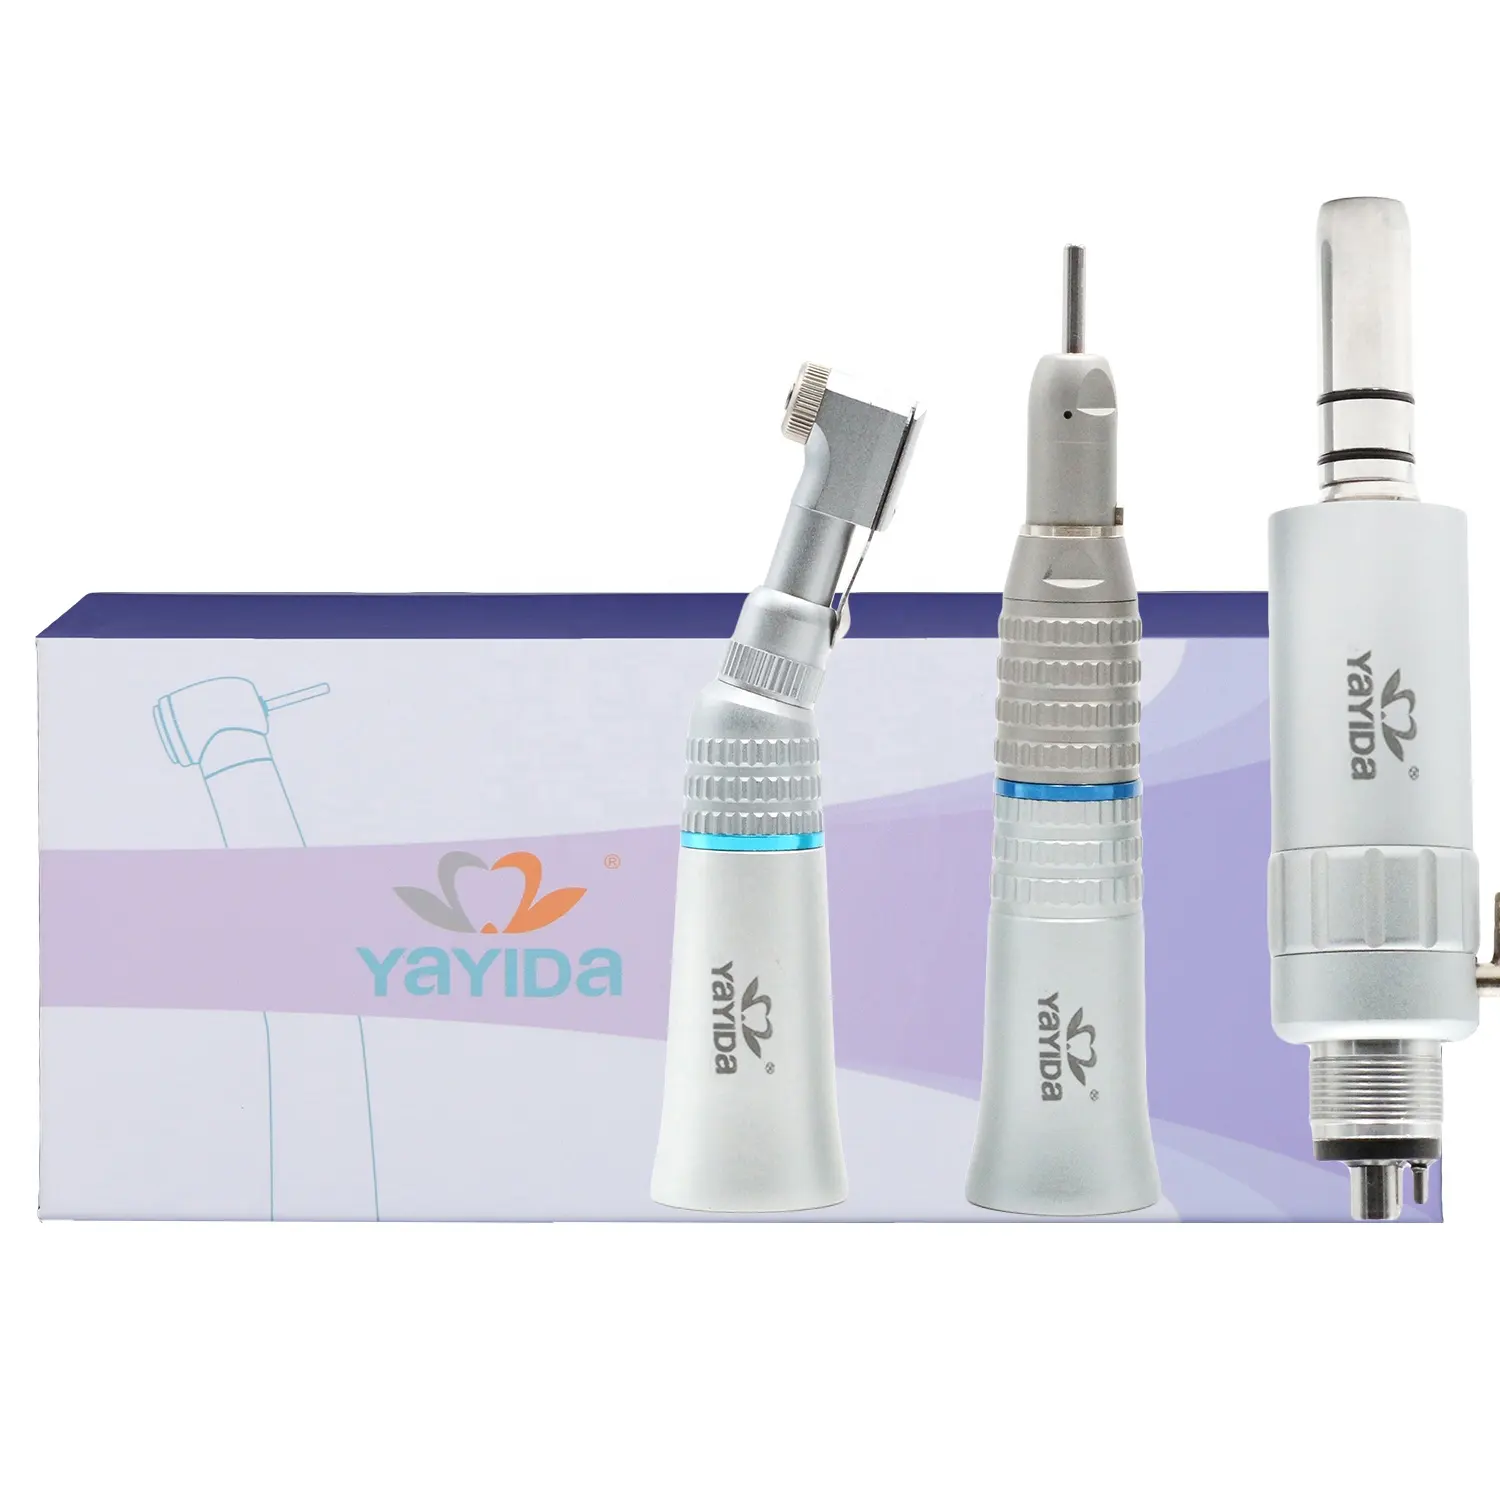 YAYIDA High Quality Surgical Handpiece Kit 1:1 Dental Air Turbine Low Speed Handpiece Set